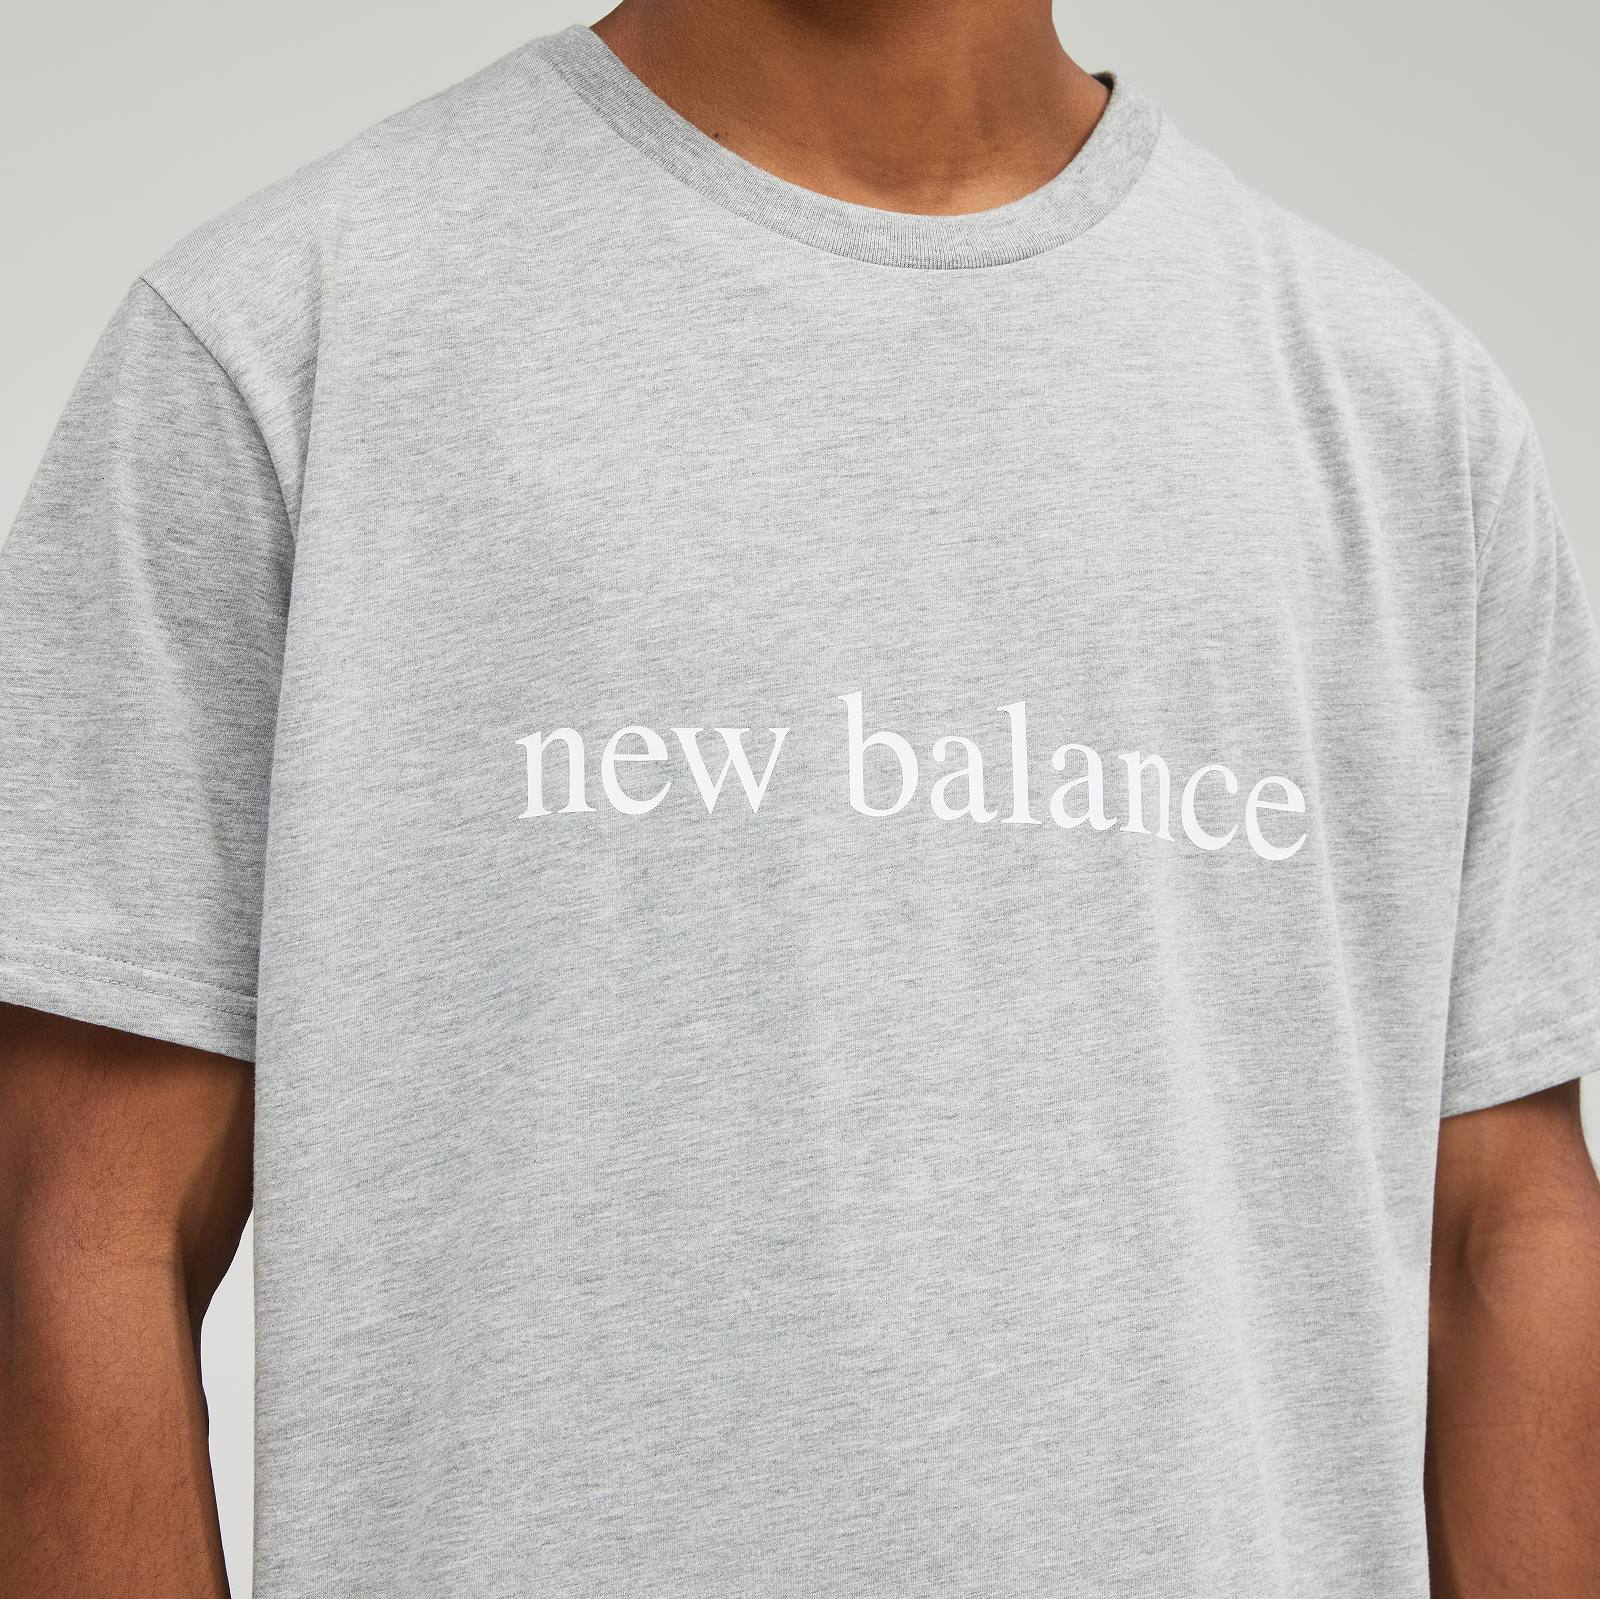 NB Essentials PURE BALANCE ドープダイTシャツ